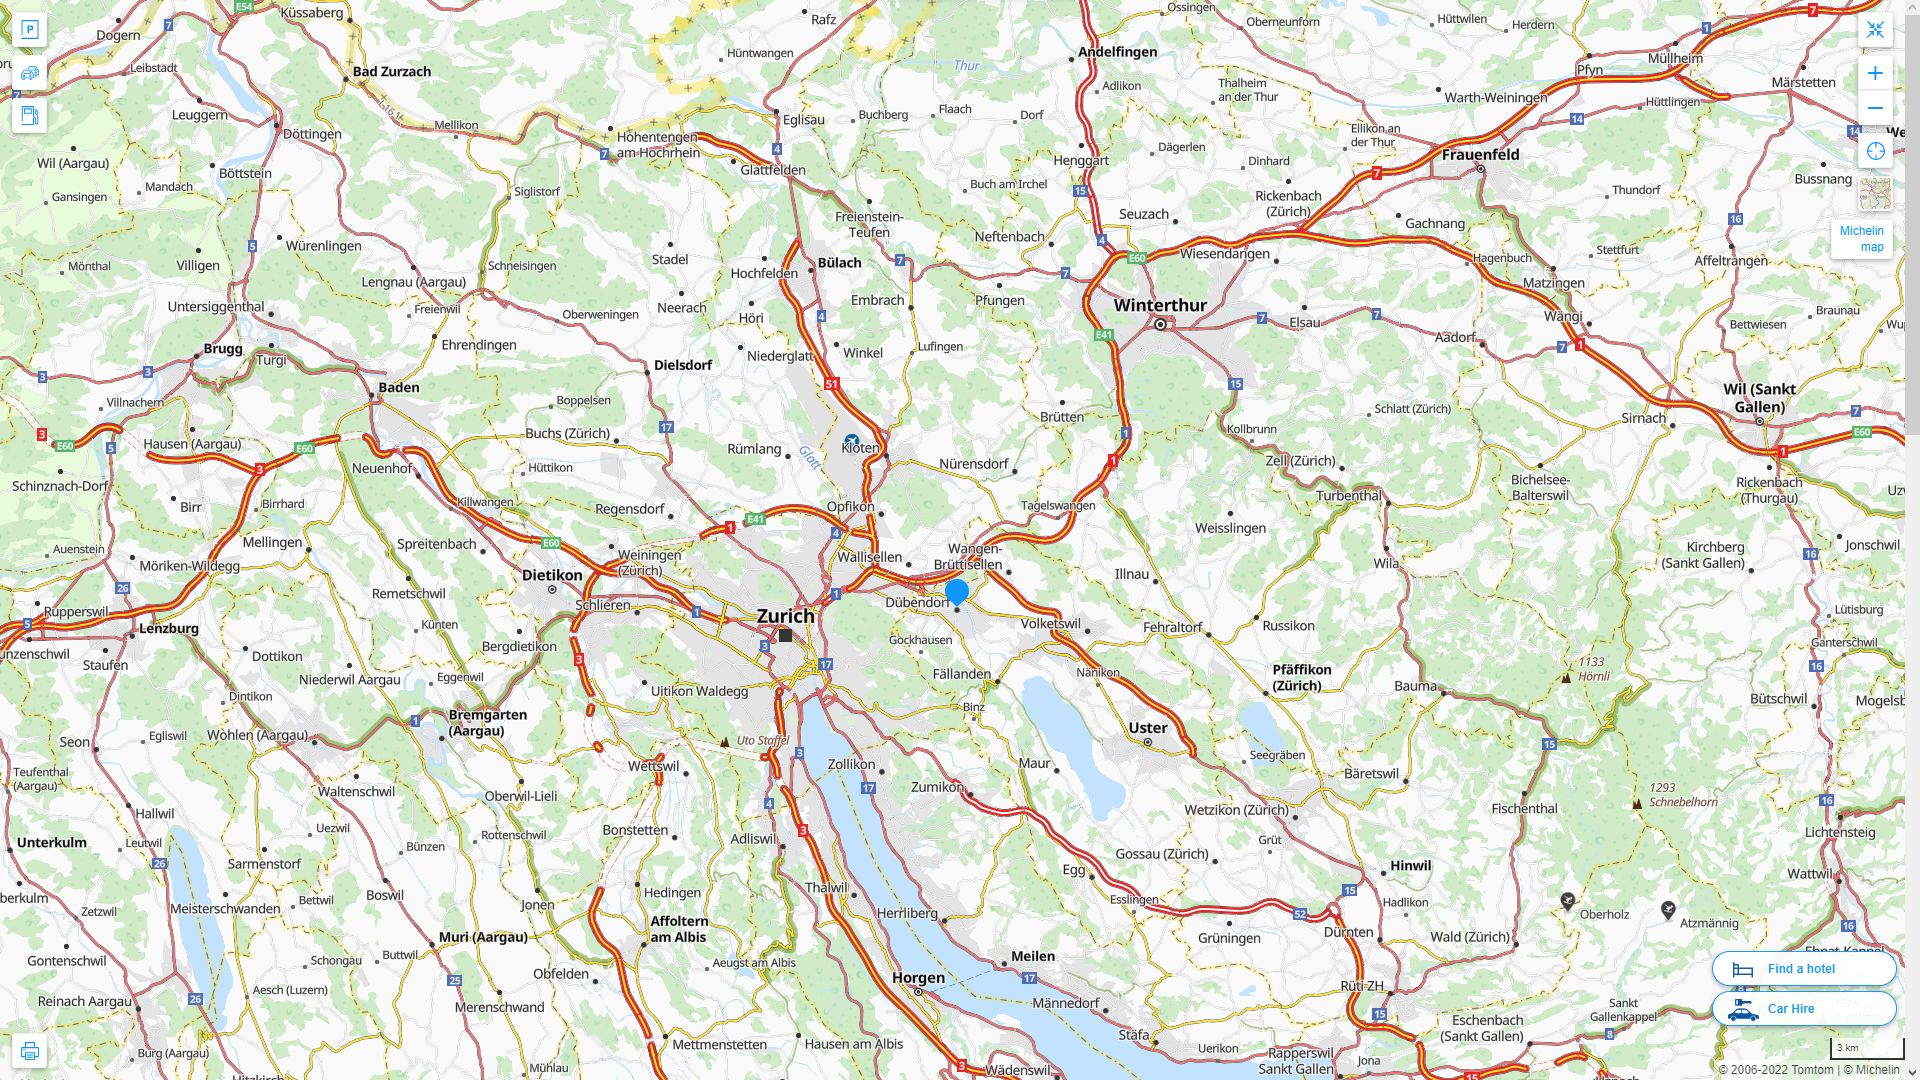 Dübendorf Highway and Road Map